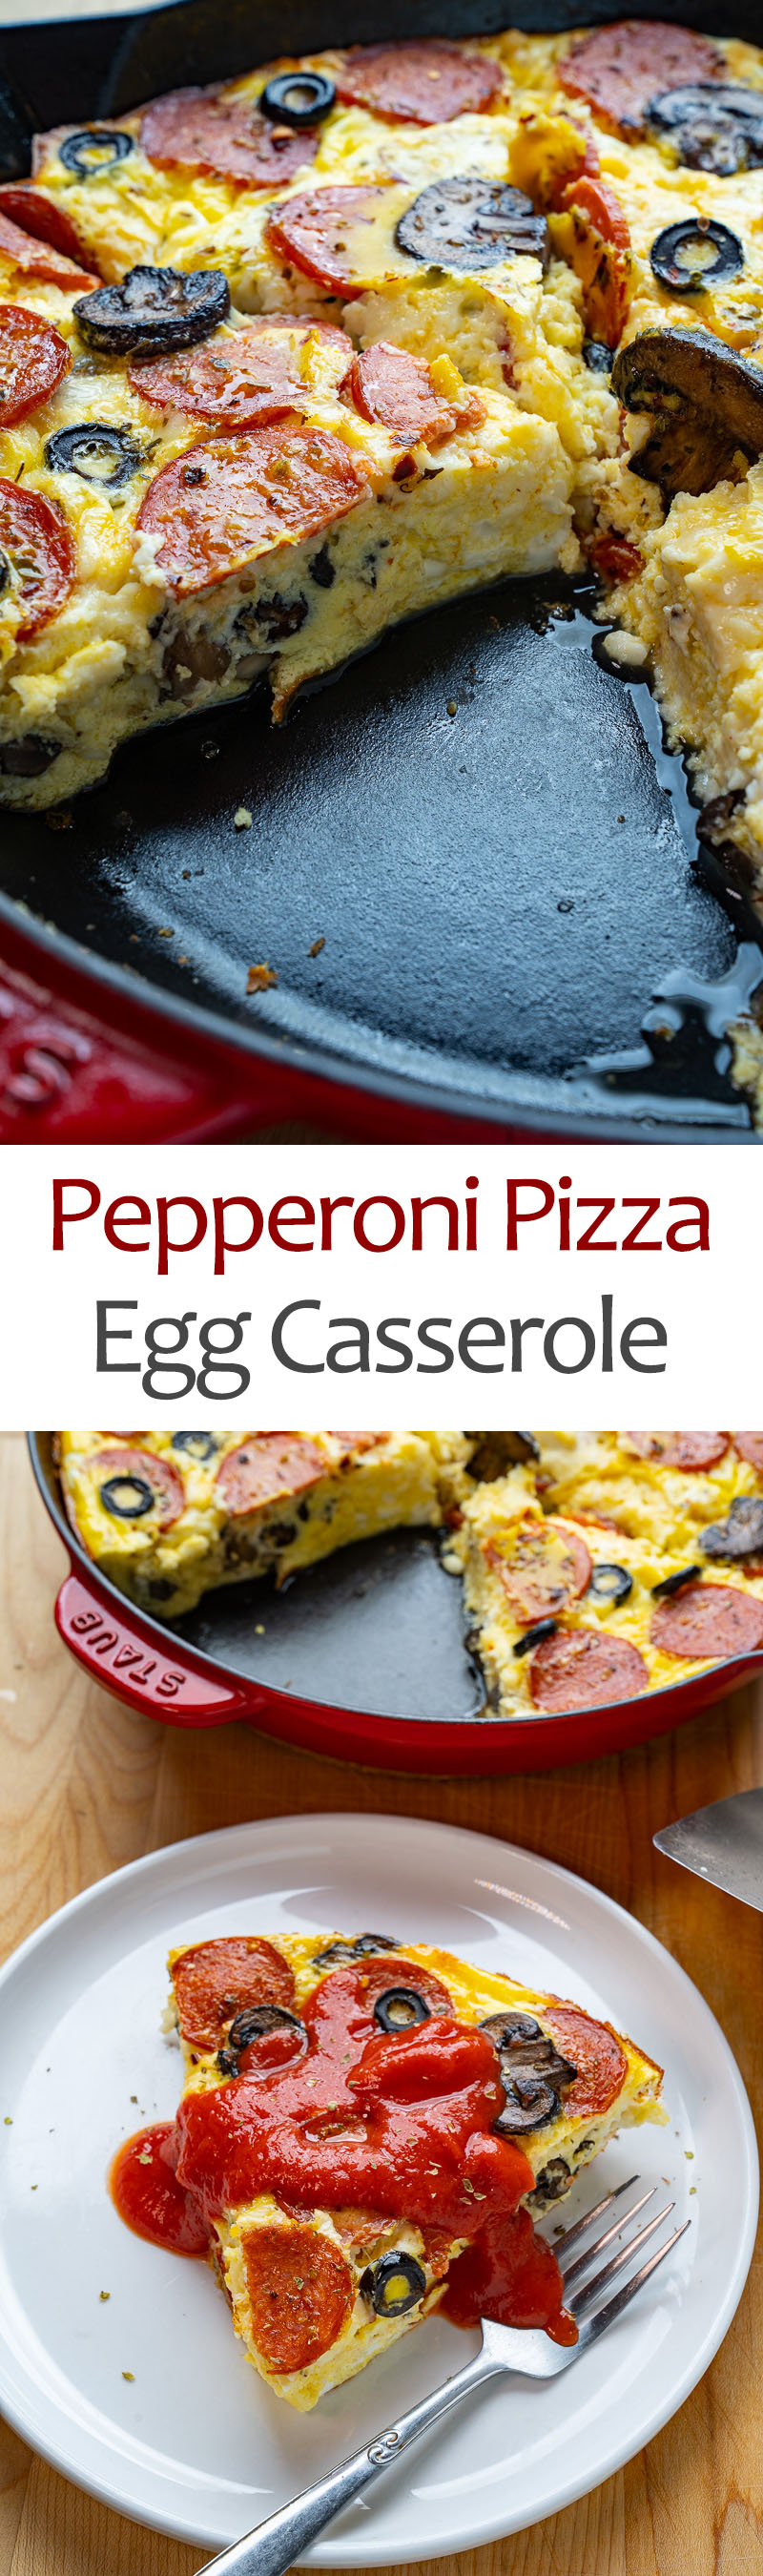 Pepperoni Pizza Egg Casserole